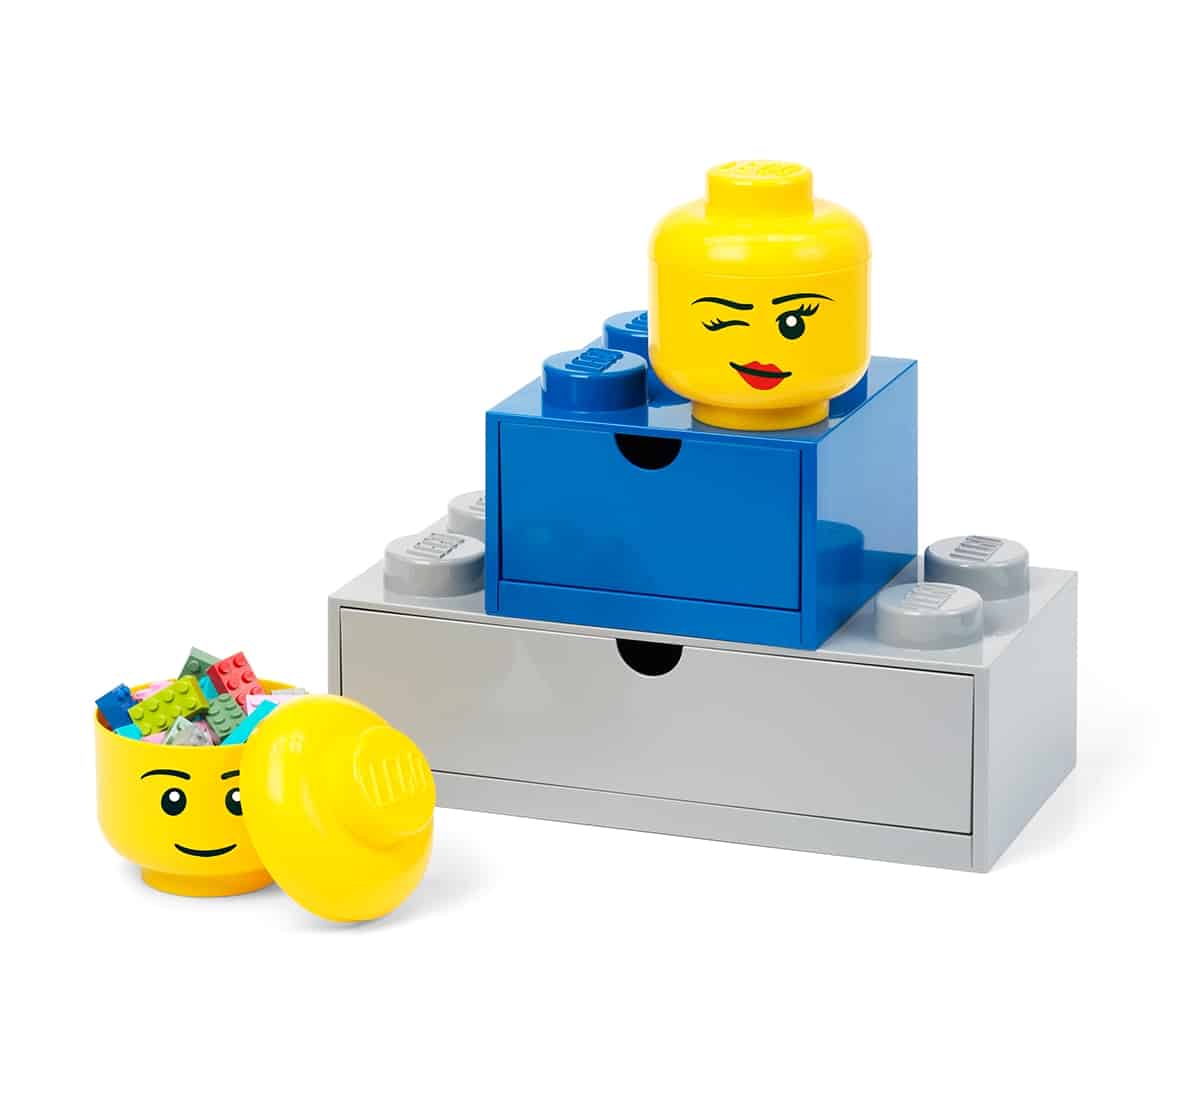 miniaturni lego 5006211 ulozny box hlava minifigurky mrkajici